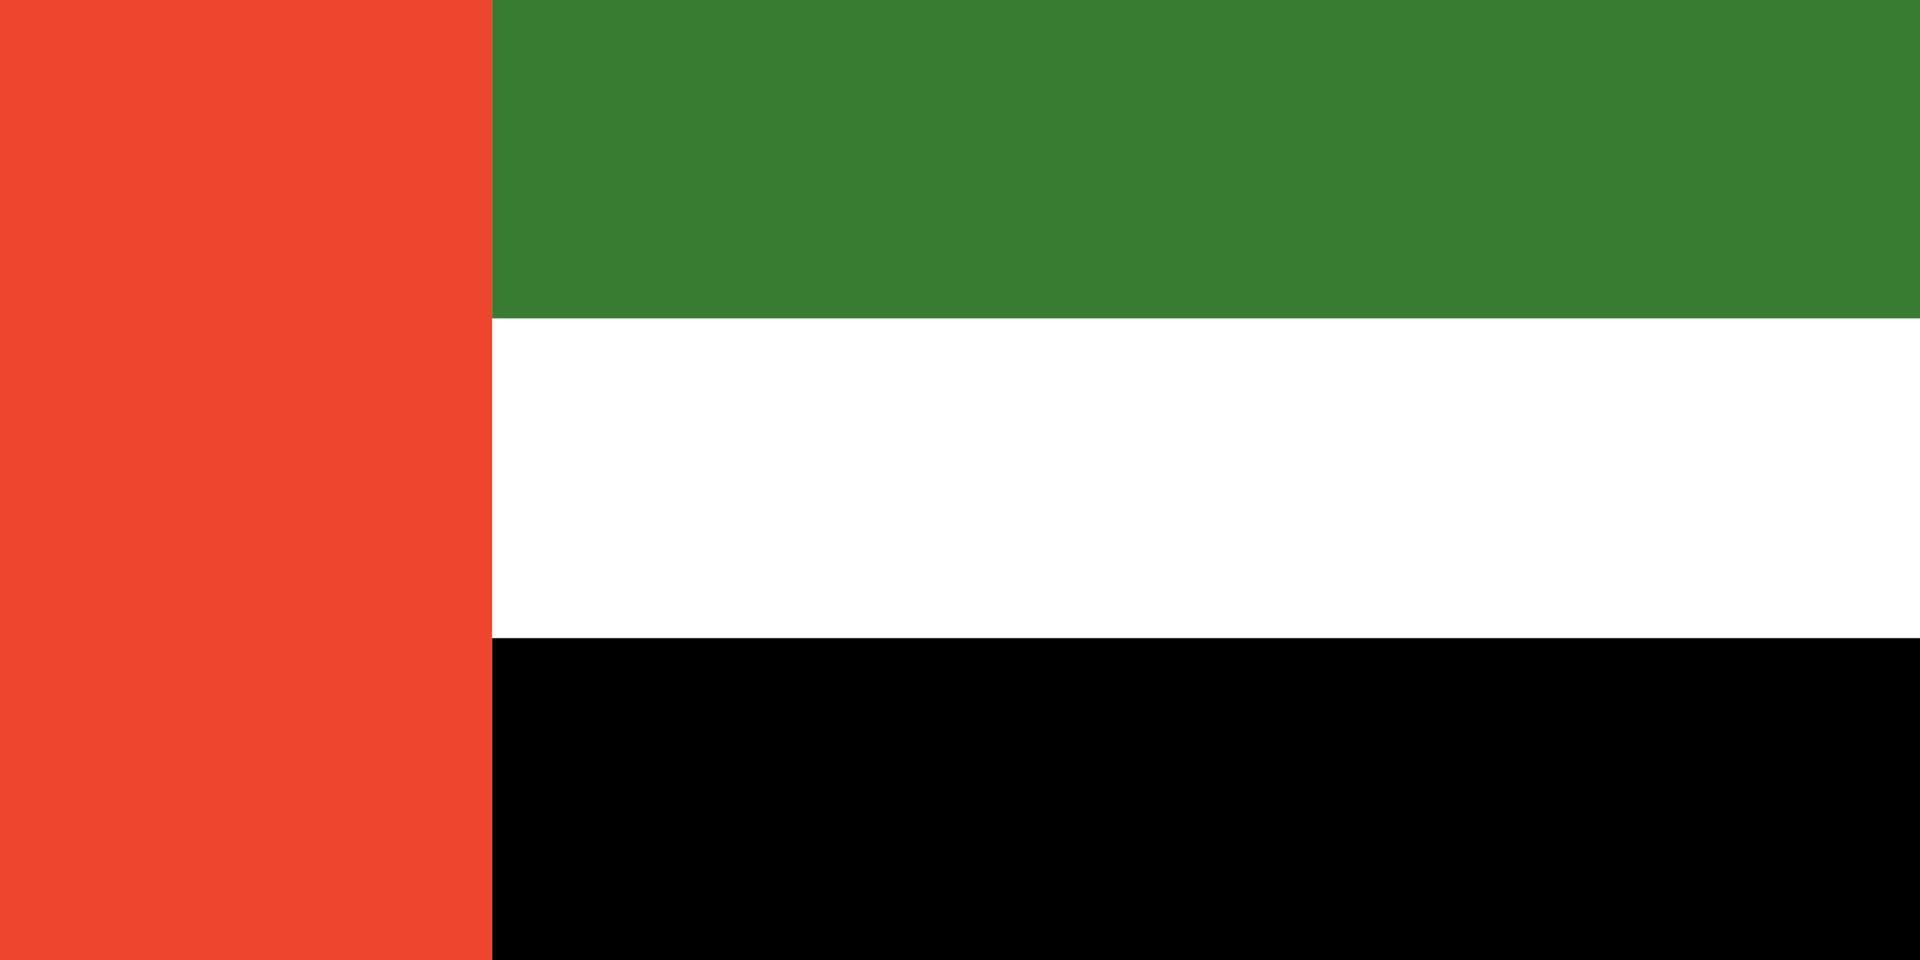 bandeira dos Emirados Árabes Unidos. cores e proporções oficiais. bandeira nacional dos Emirados Árabes Unidos. vetor